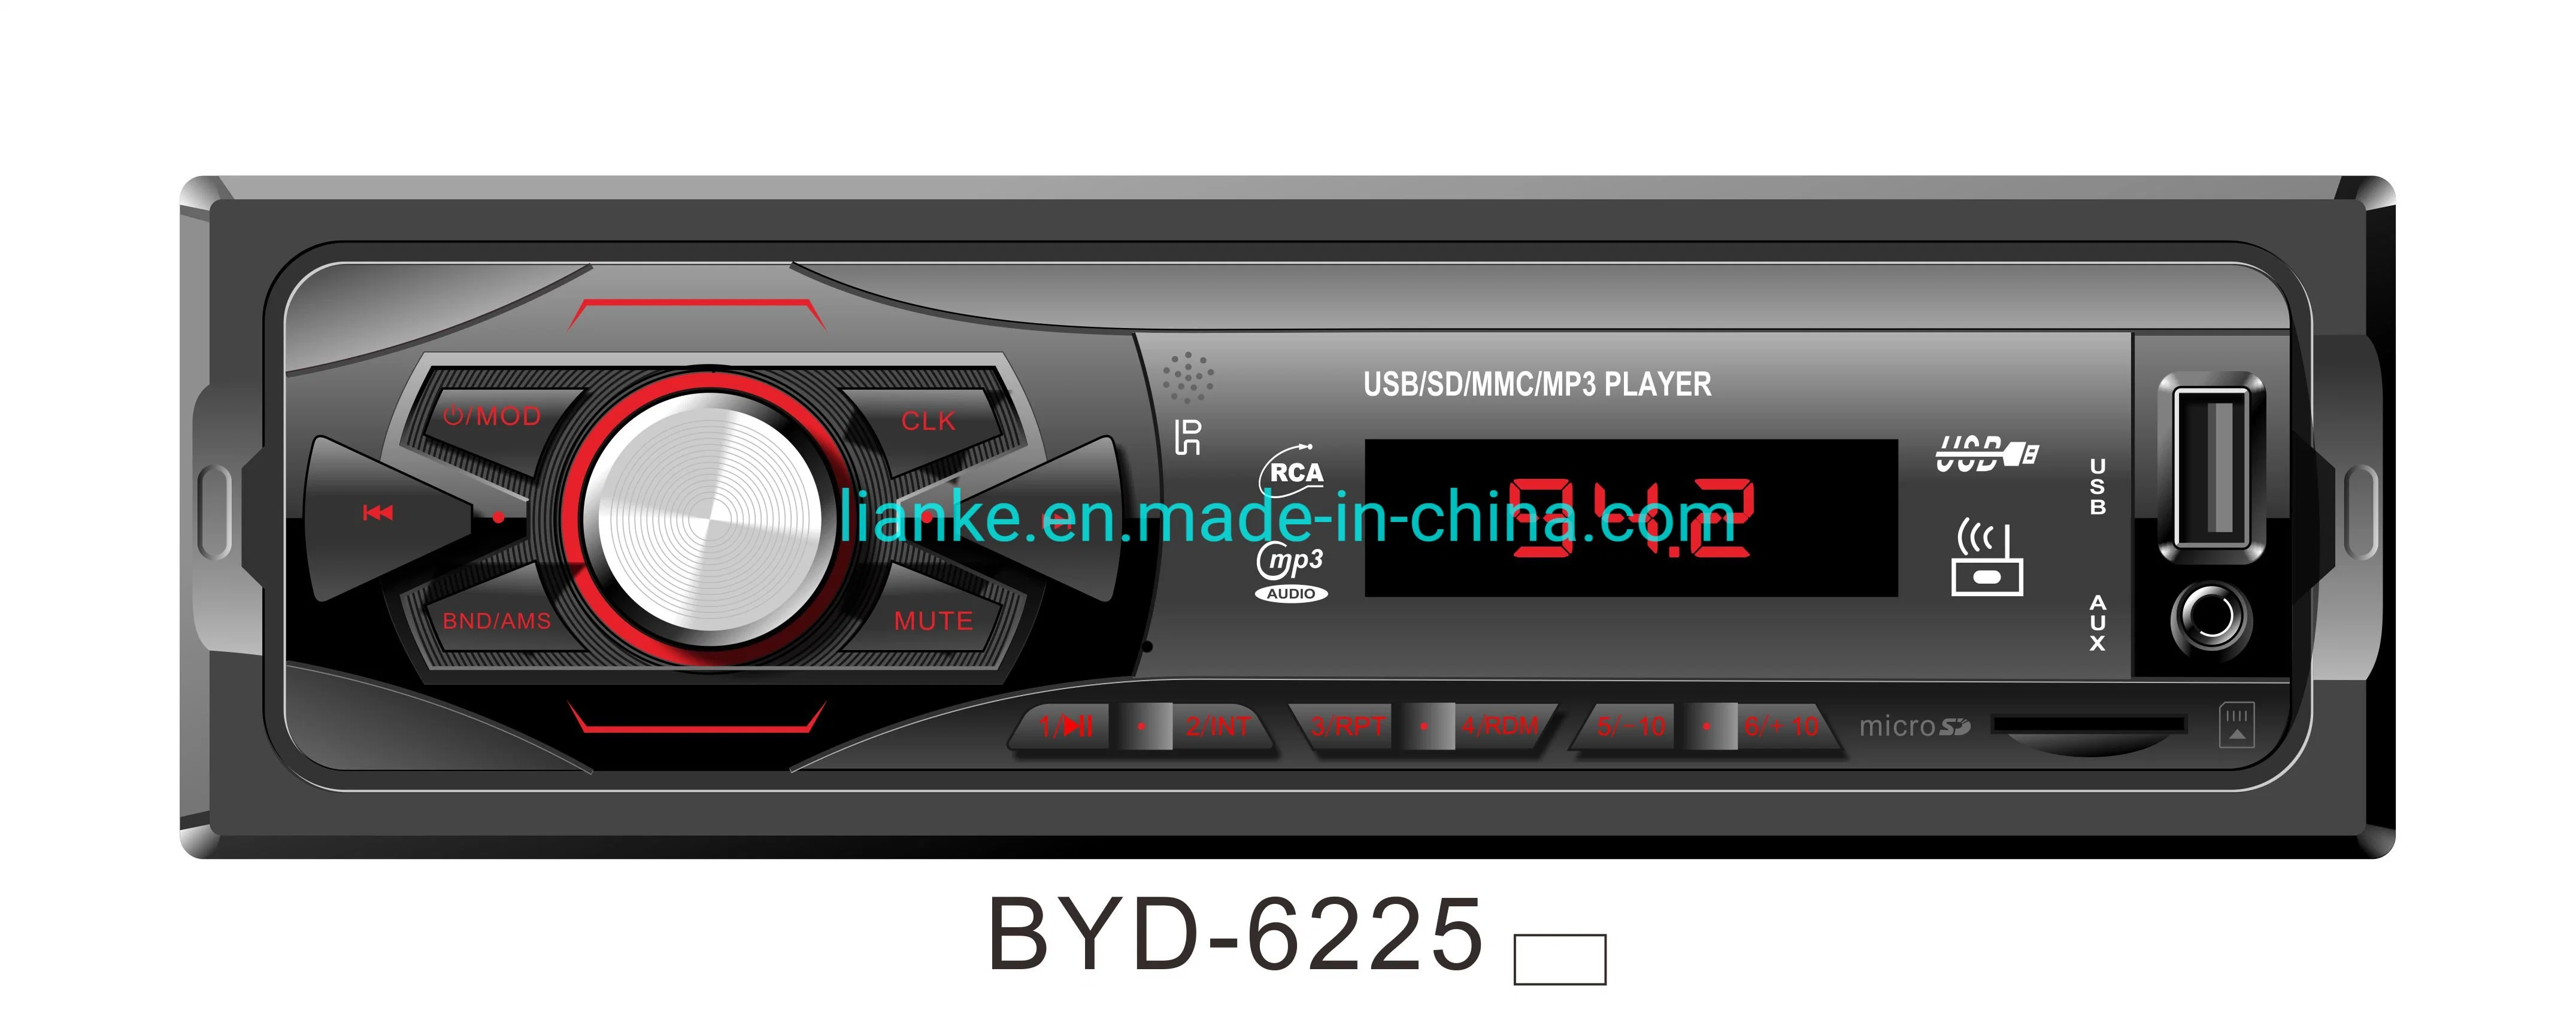 مشغل صوت Bluetooth® بشاشة LED رقمية USB MP3 للسيارة